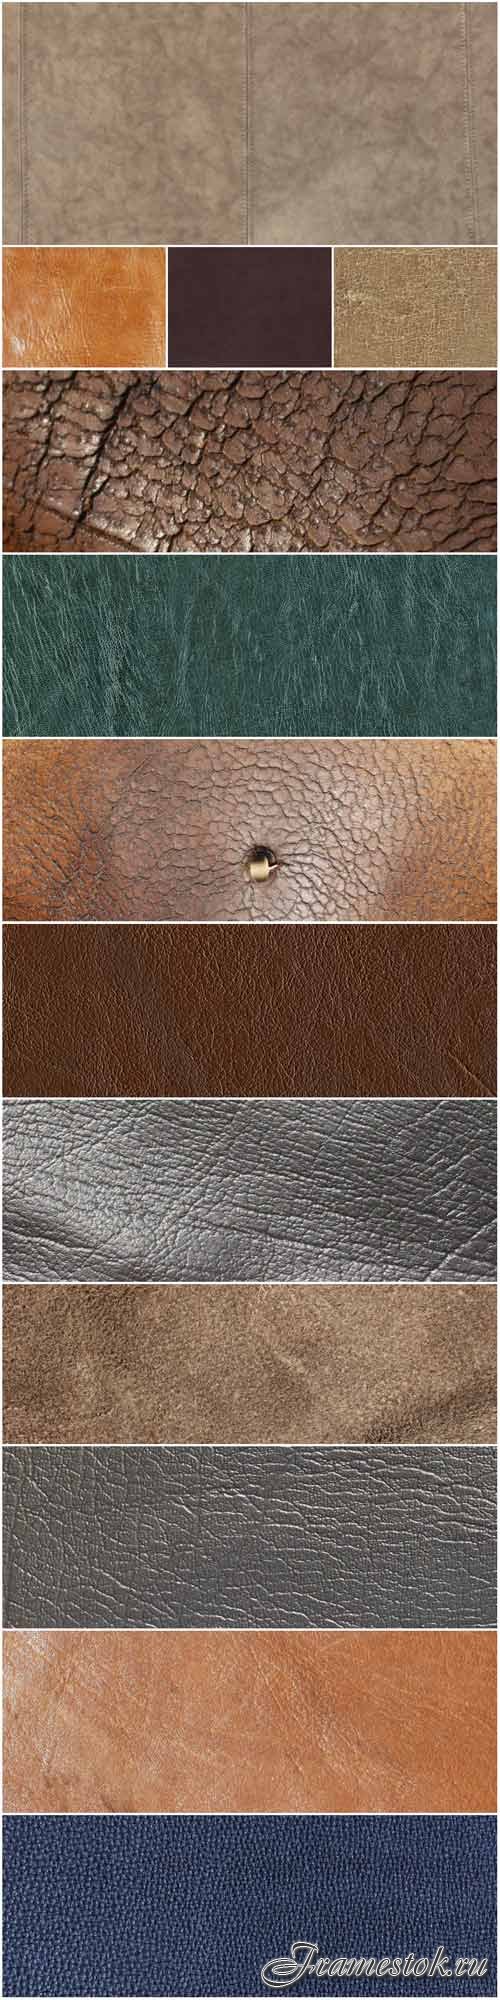 Leather texture mammals part 3